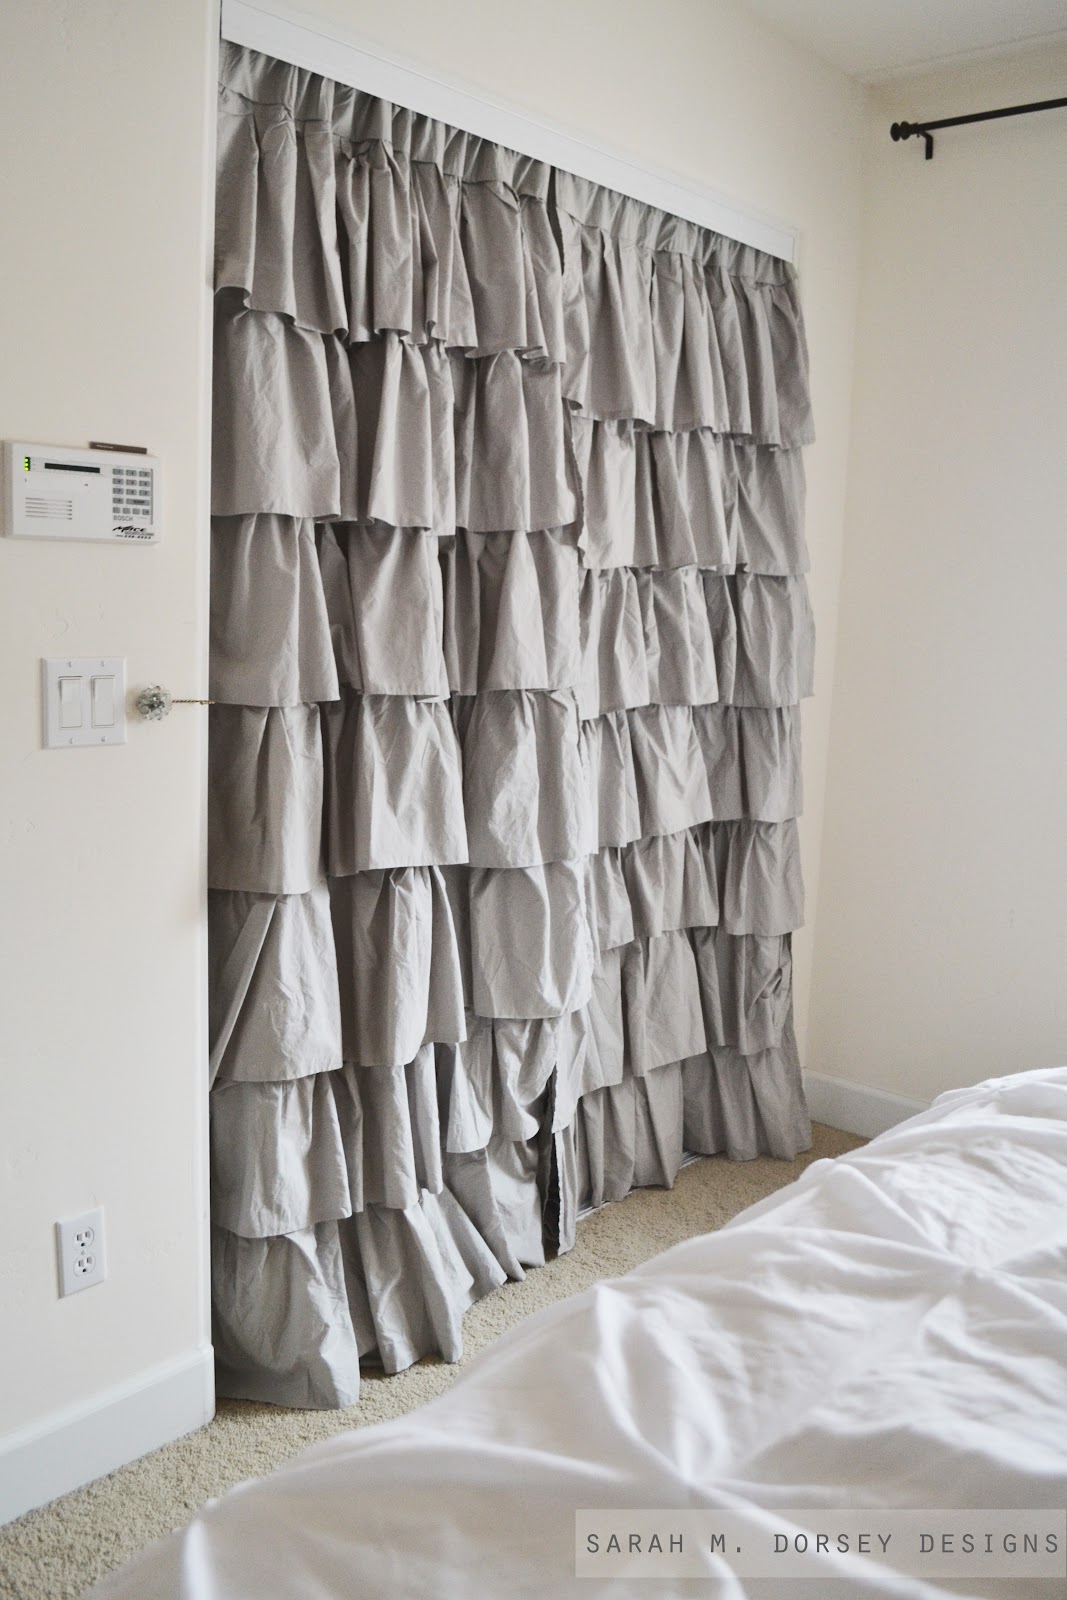 Sarah m. dorsey designs: drapery panels for closet doors.